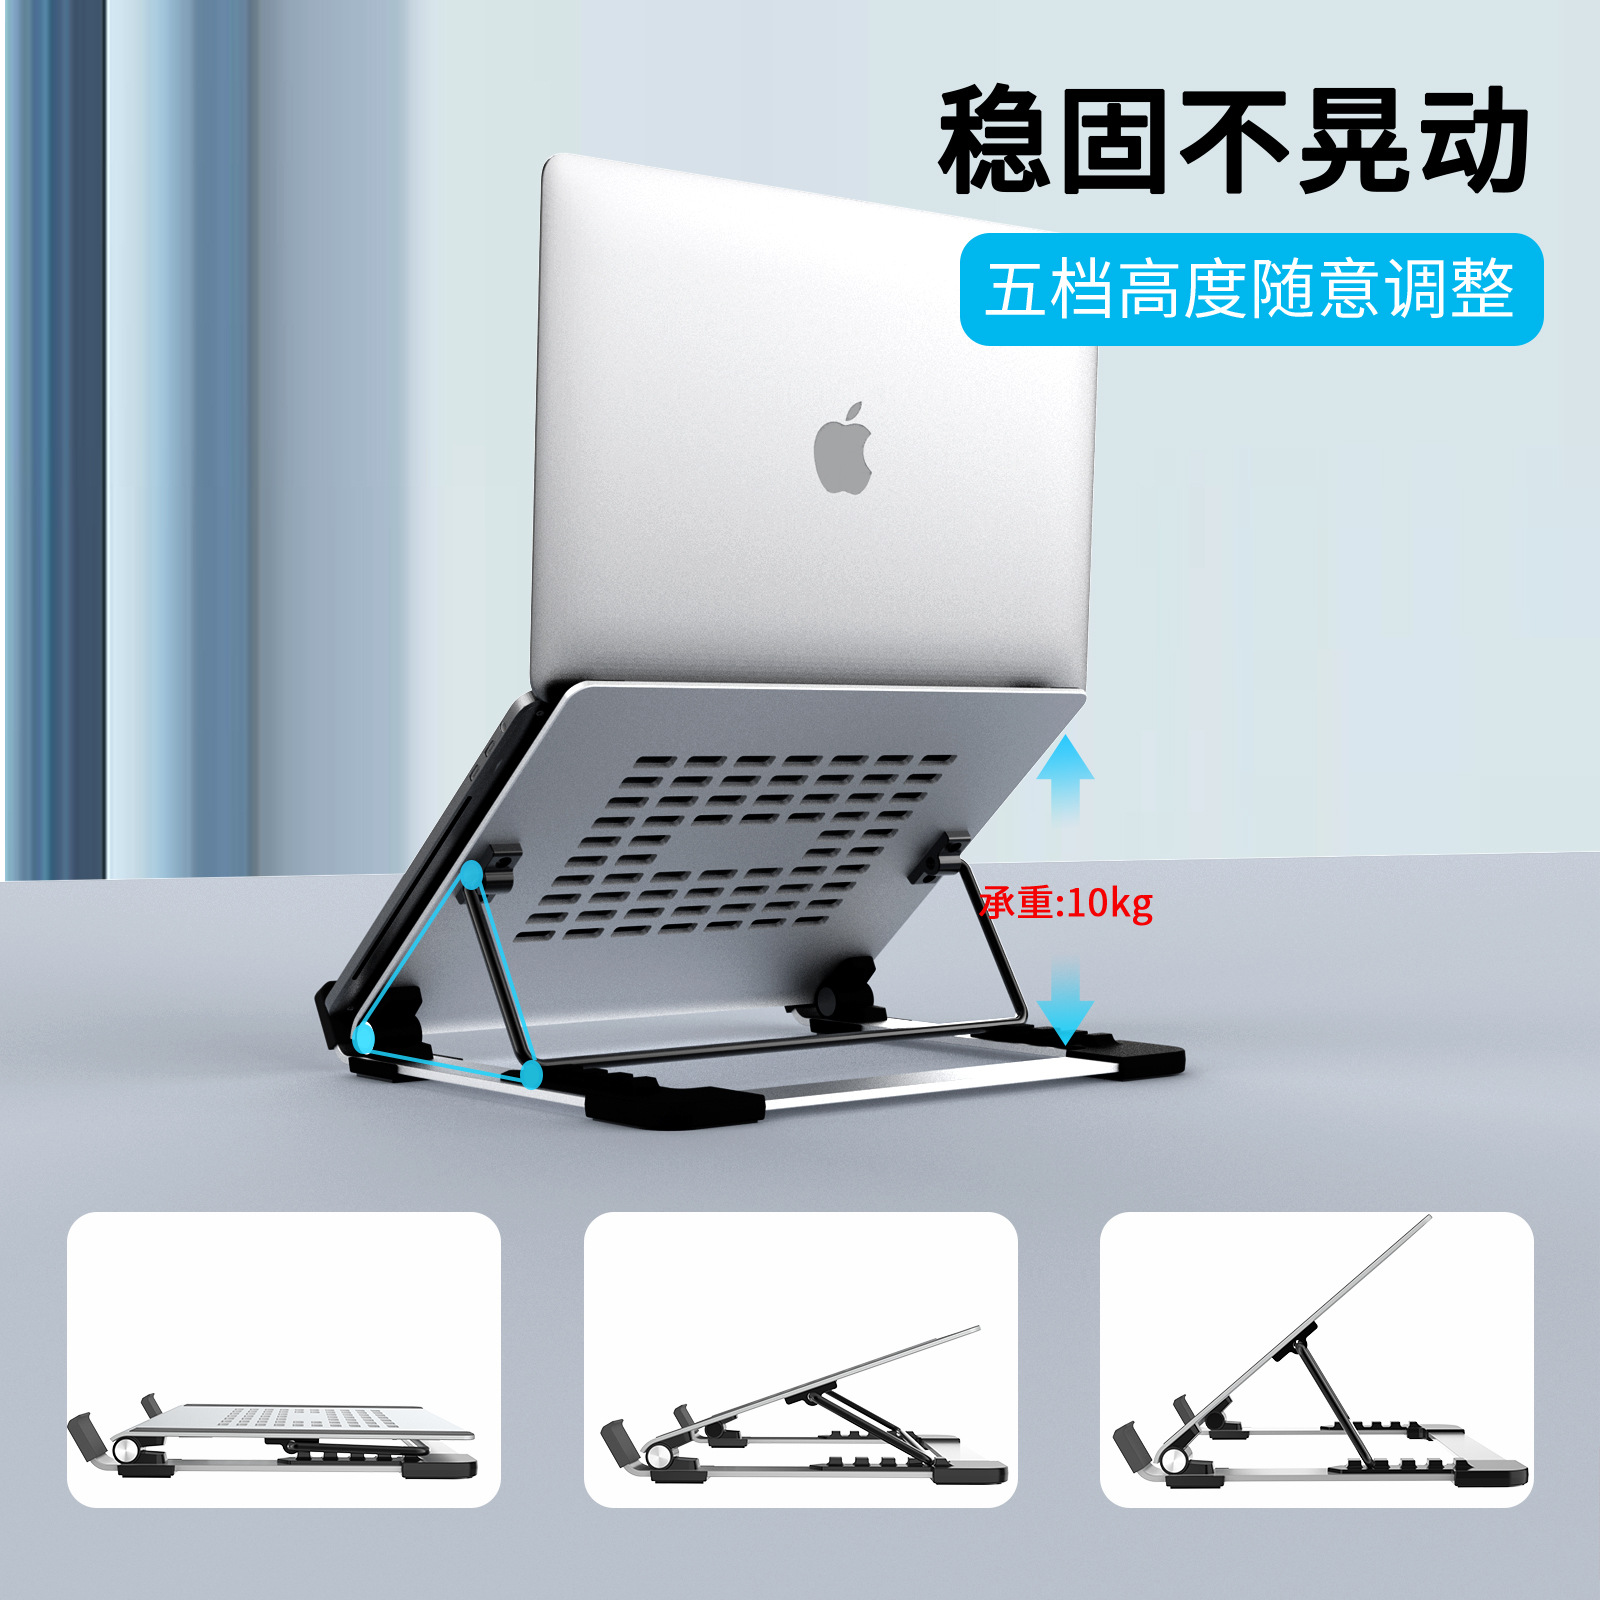 New Aluminum Alloy Laptop Stand Multi-Gear Adjustable Foldable Metallic Desktop Office Computer Stand